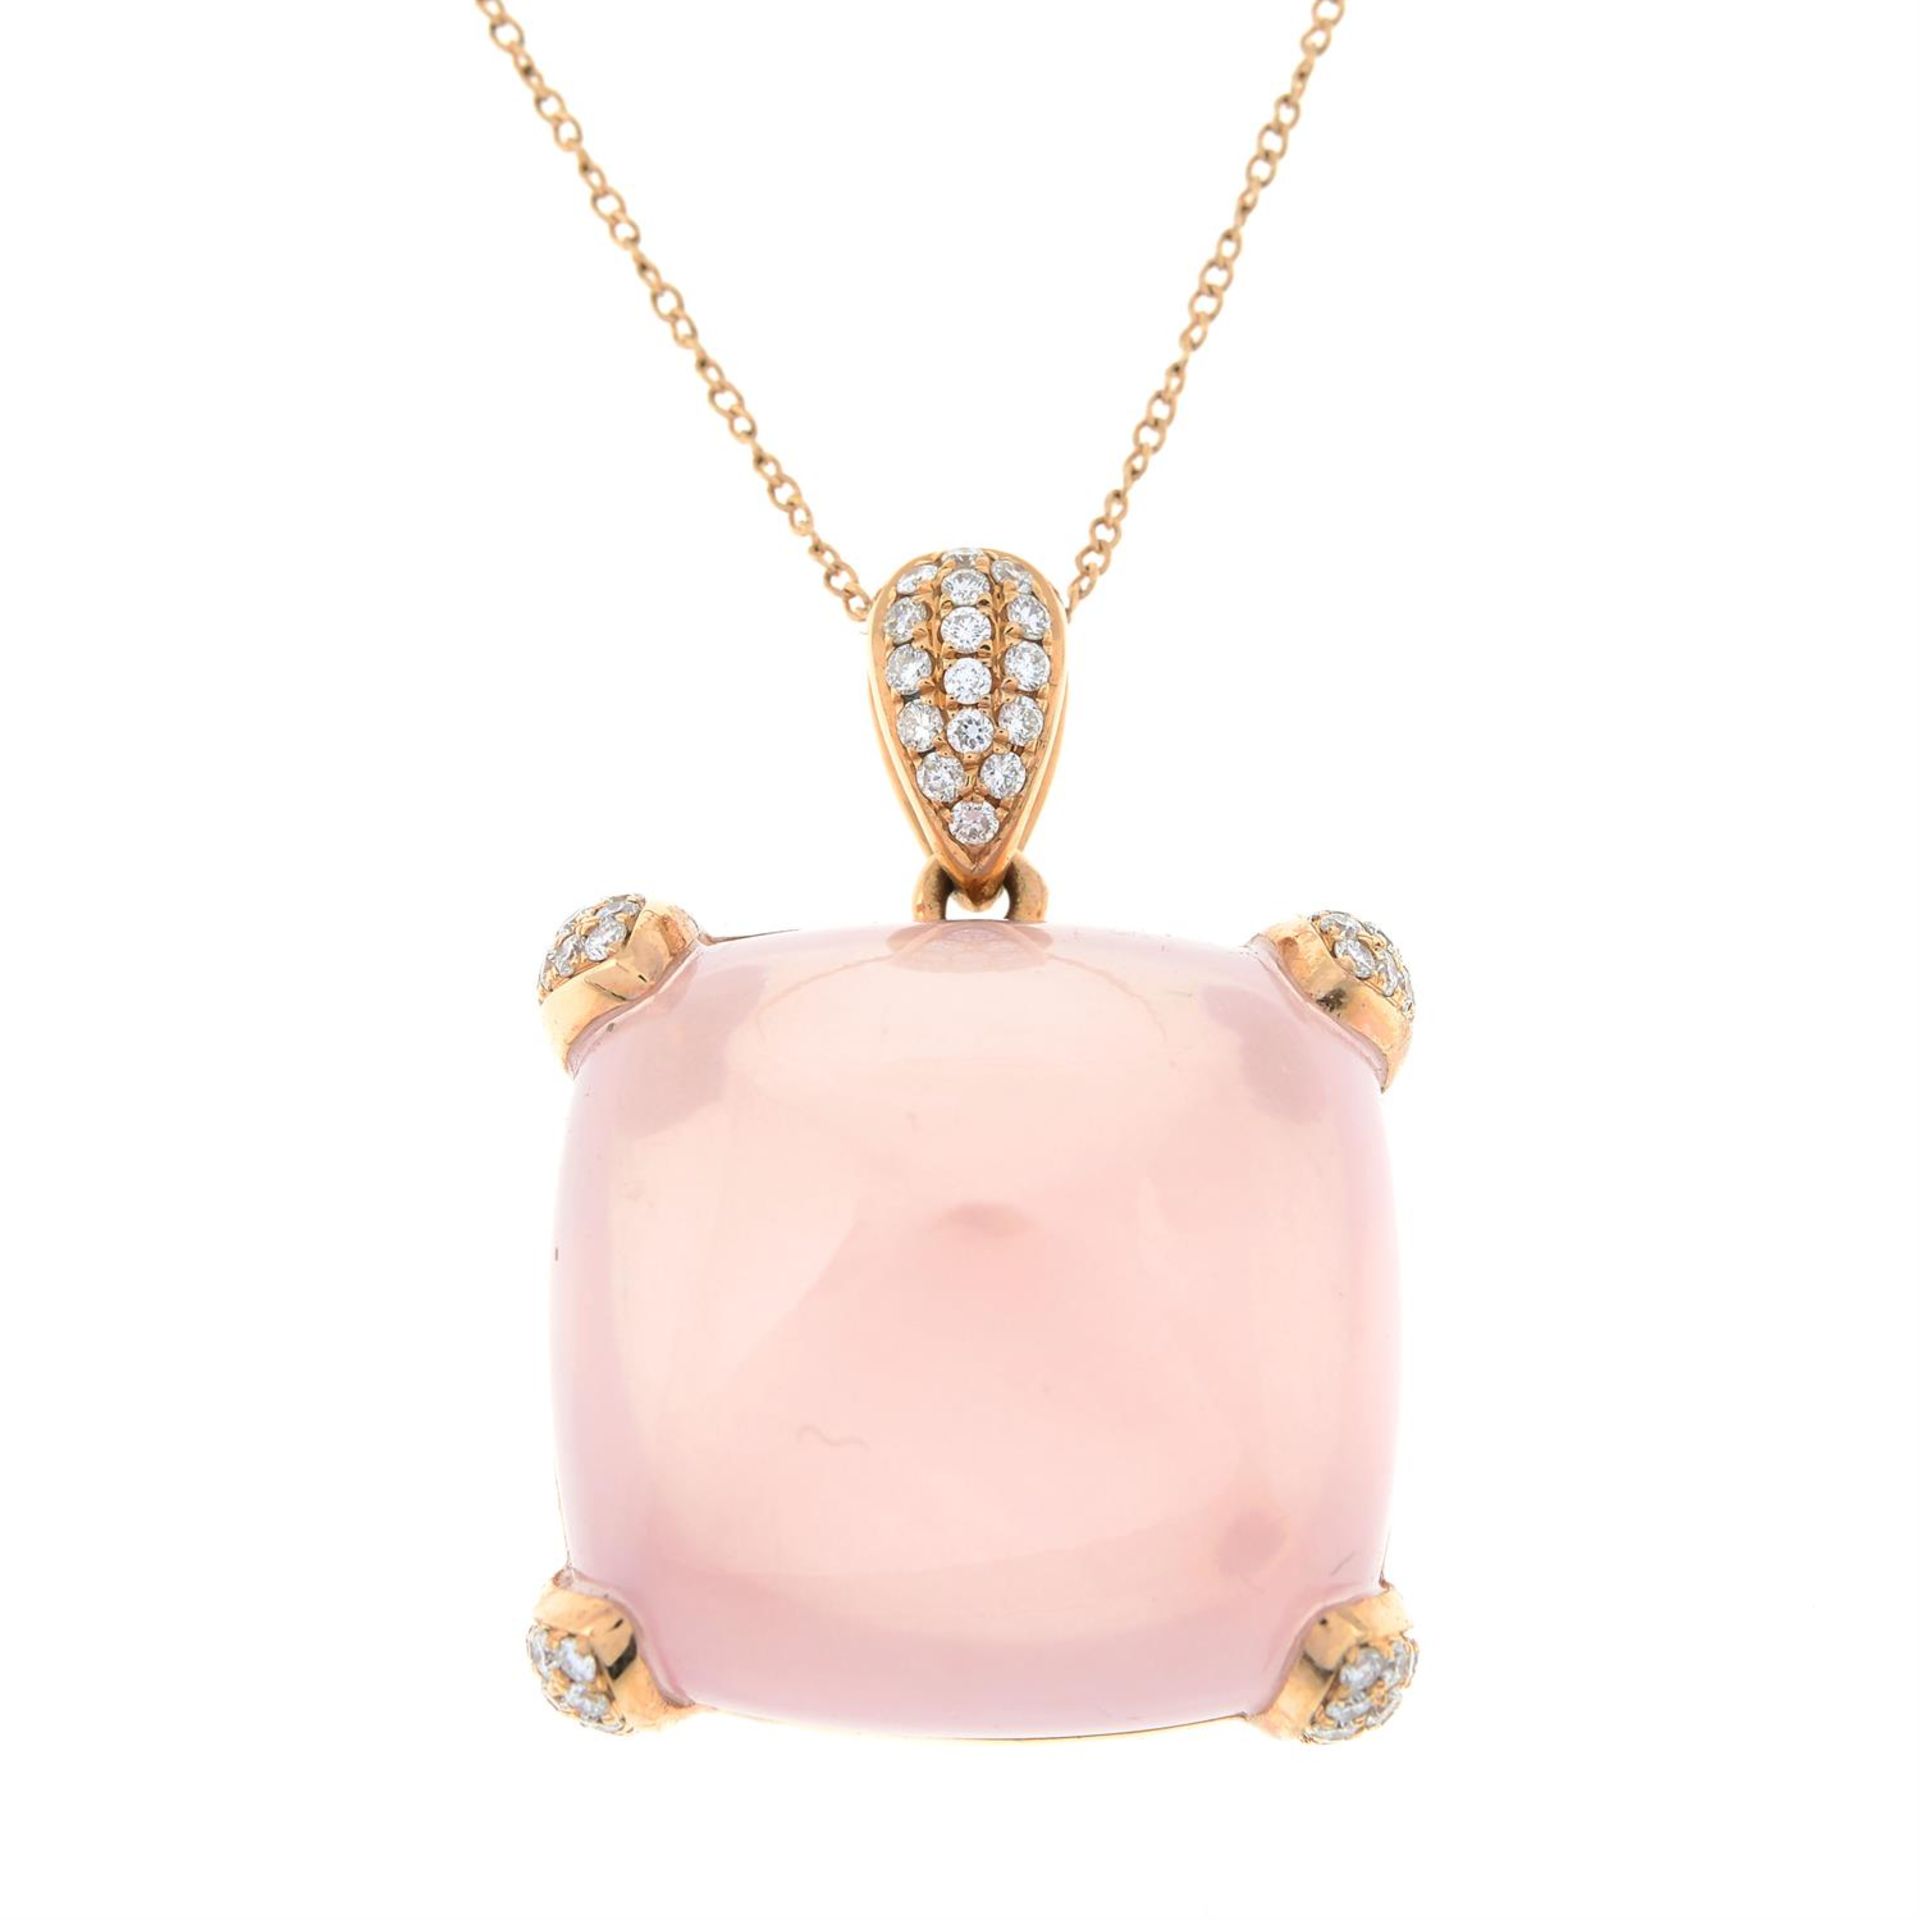 A rose quartz and pavé-set diamond pendant, with 18ct gold chain. - Image 2 of 6